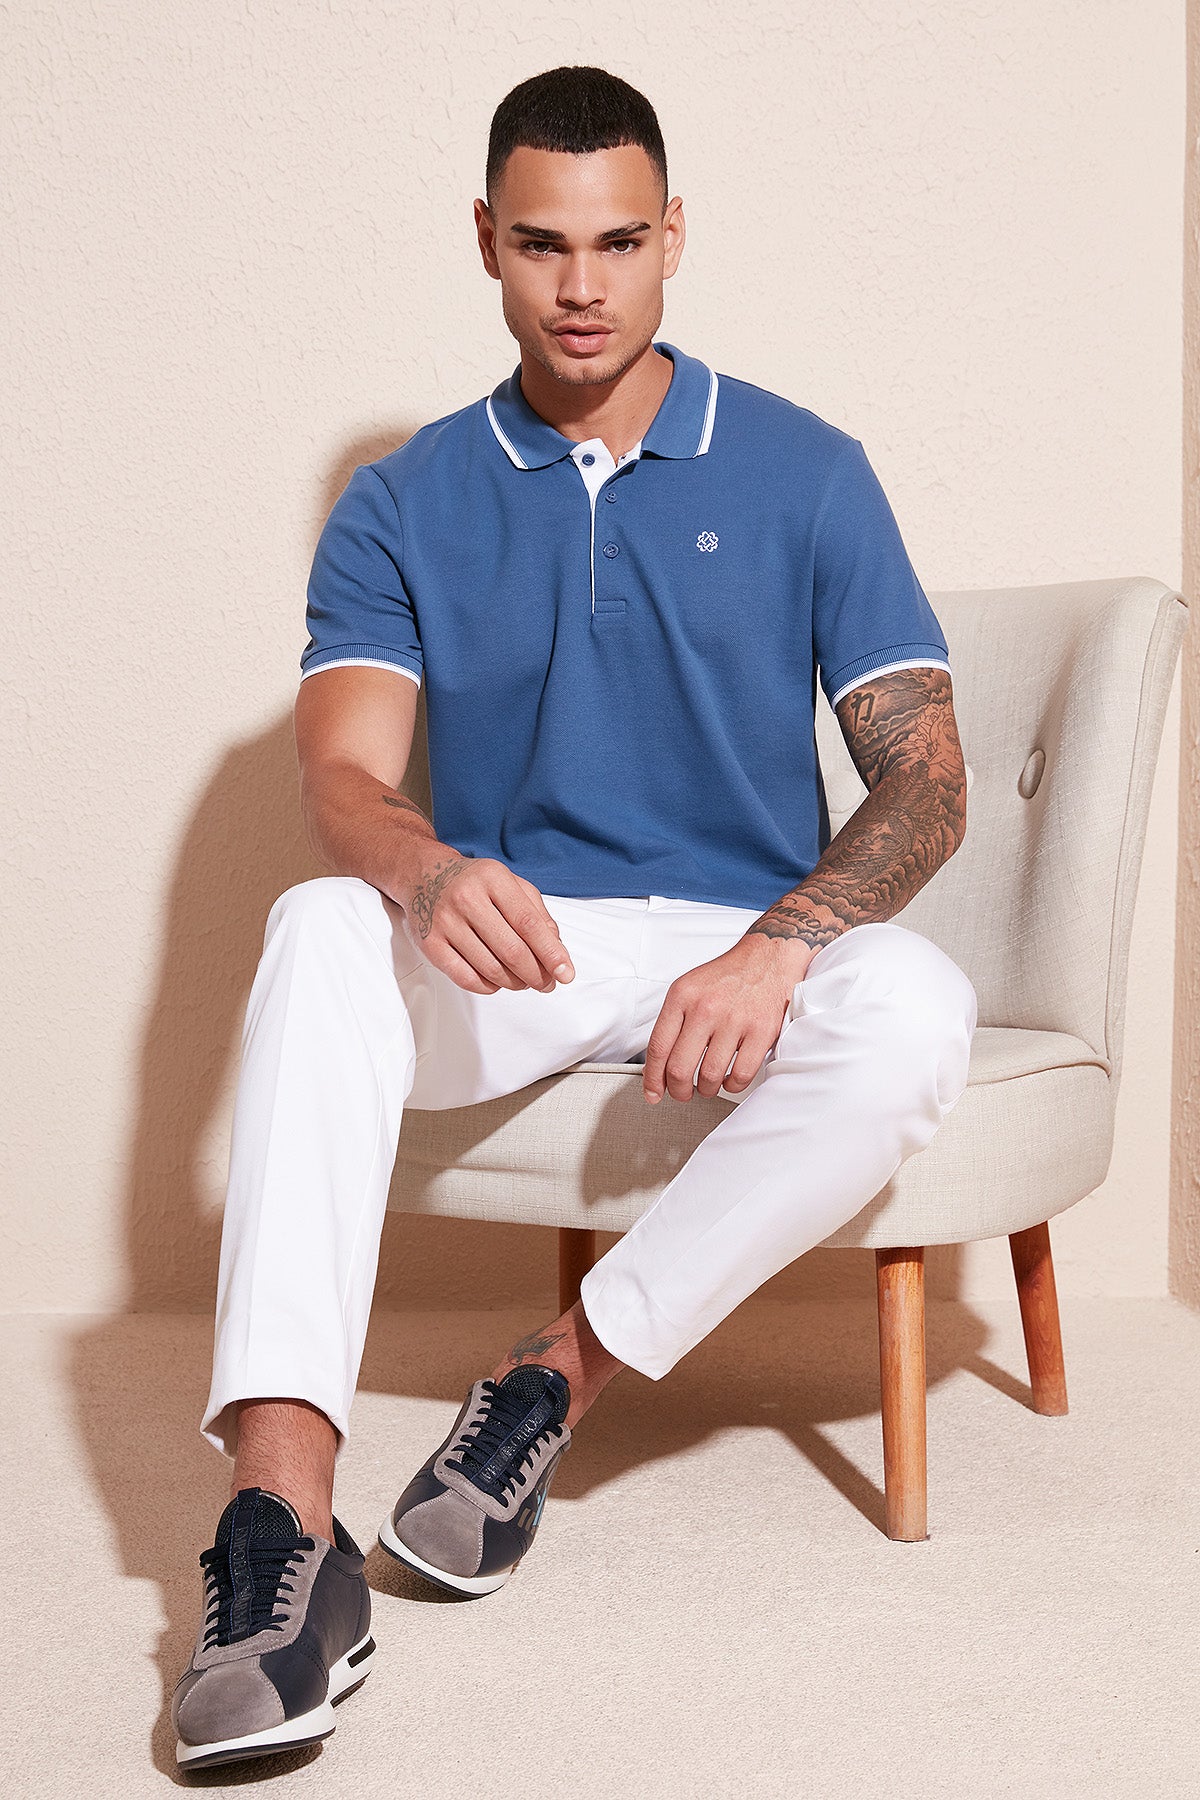 Buratti % 100 Pamuk Düğmeli Slim Fit Erkek Polo Yaka T Shirt 5902118 Koyu Mavi-Beyaz